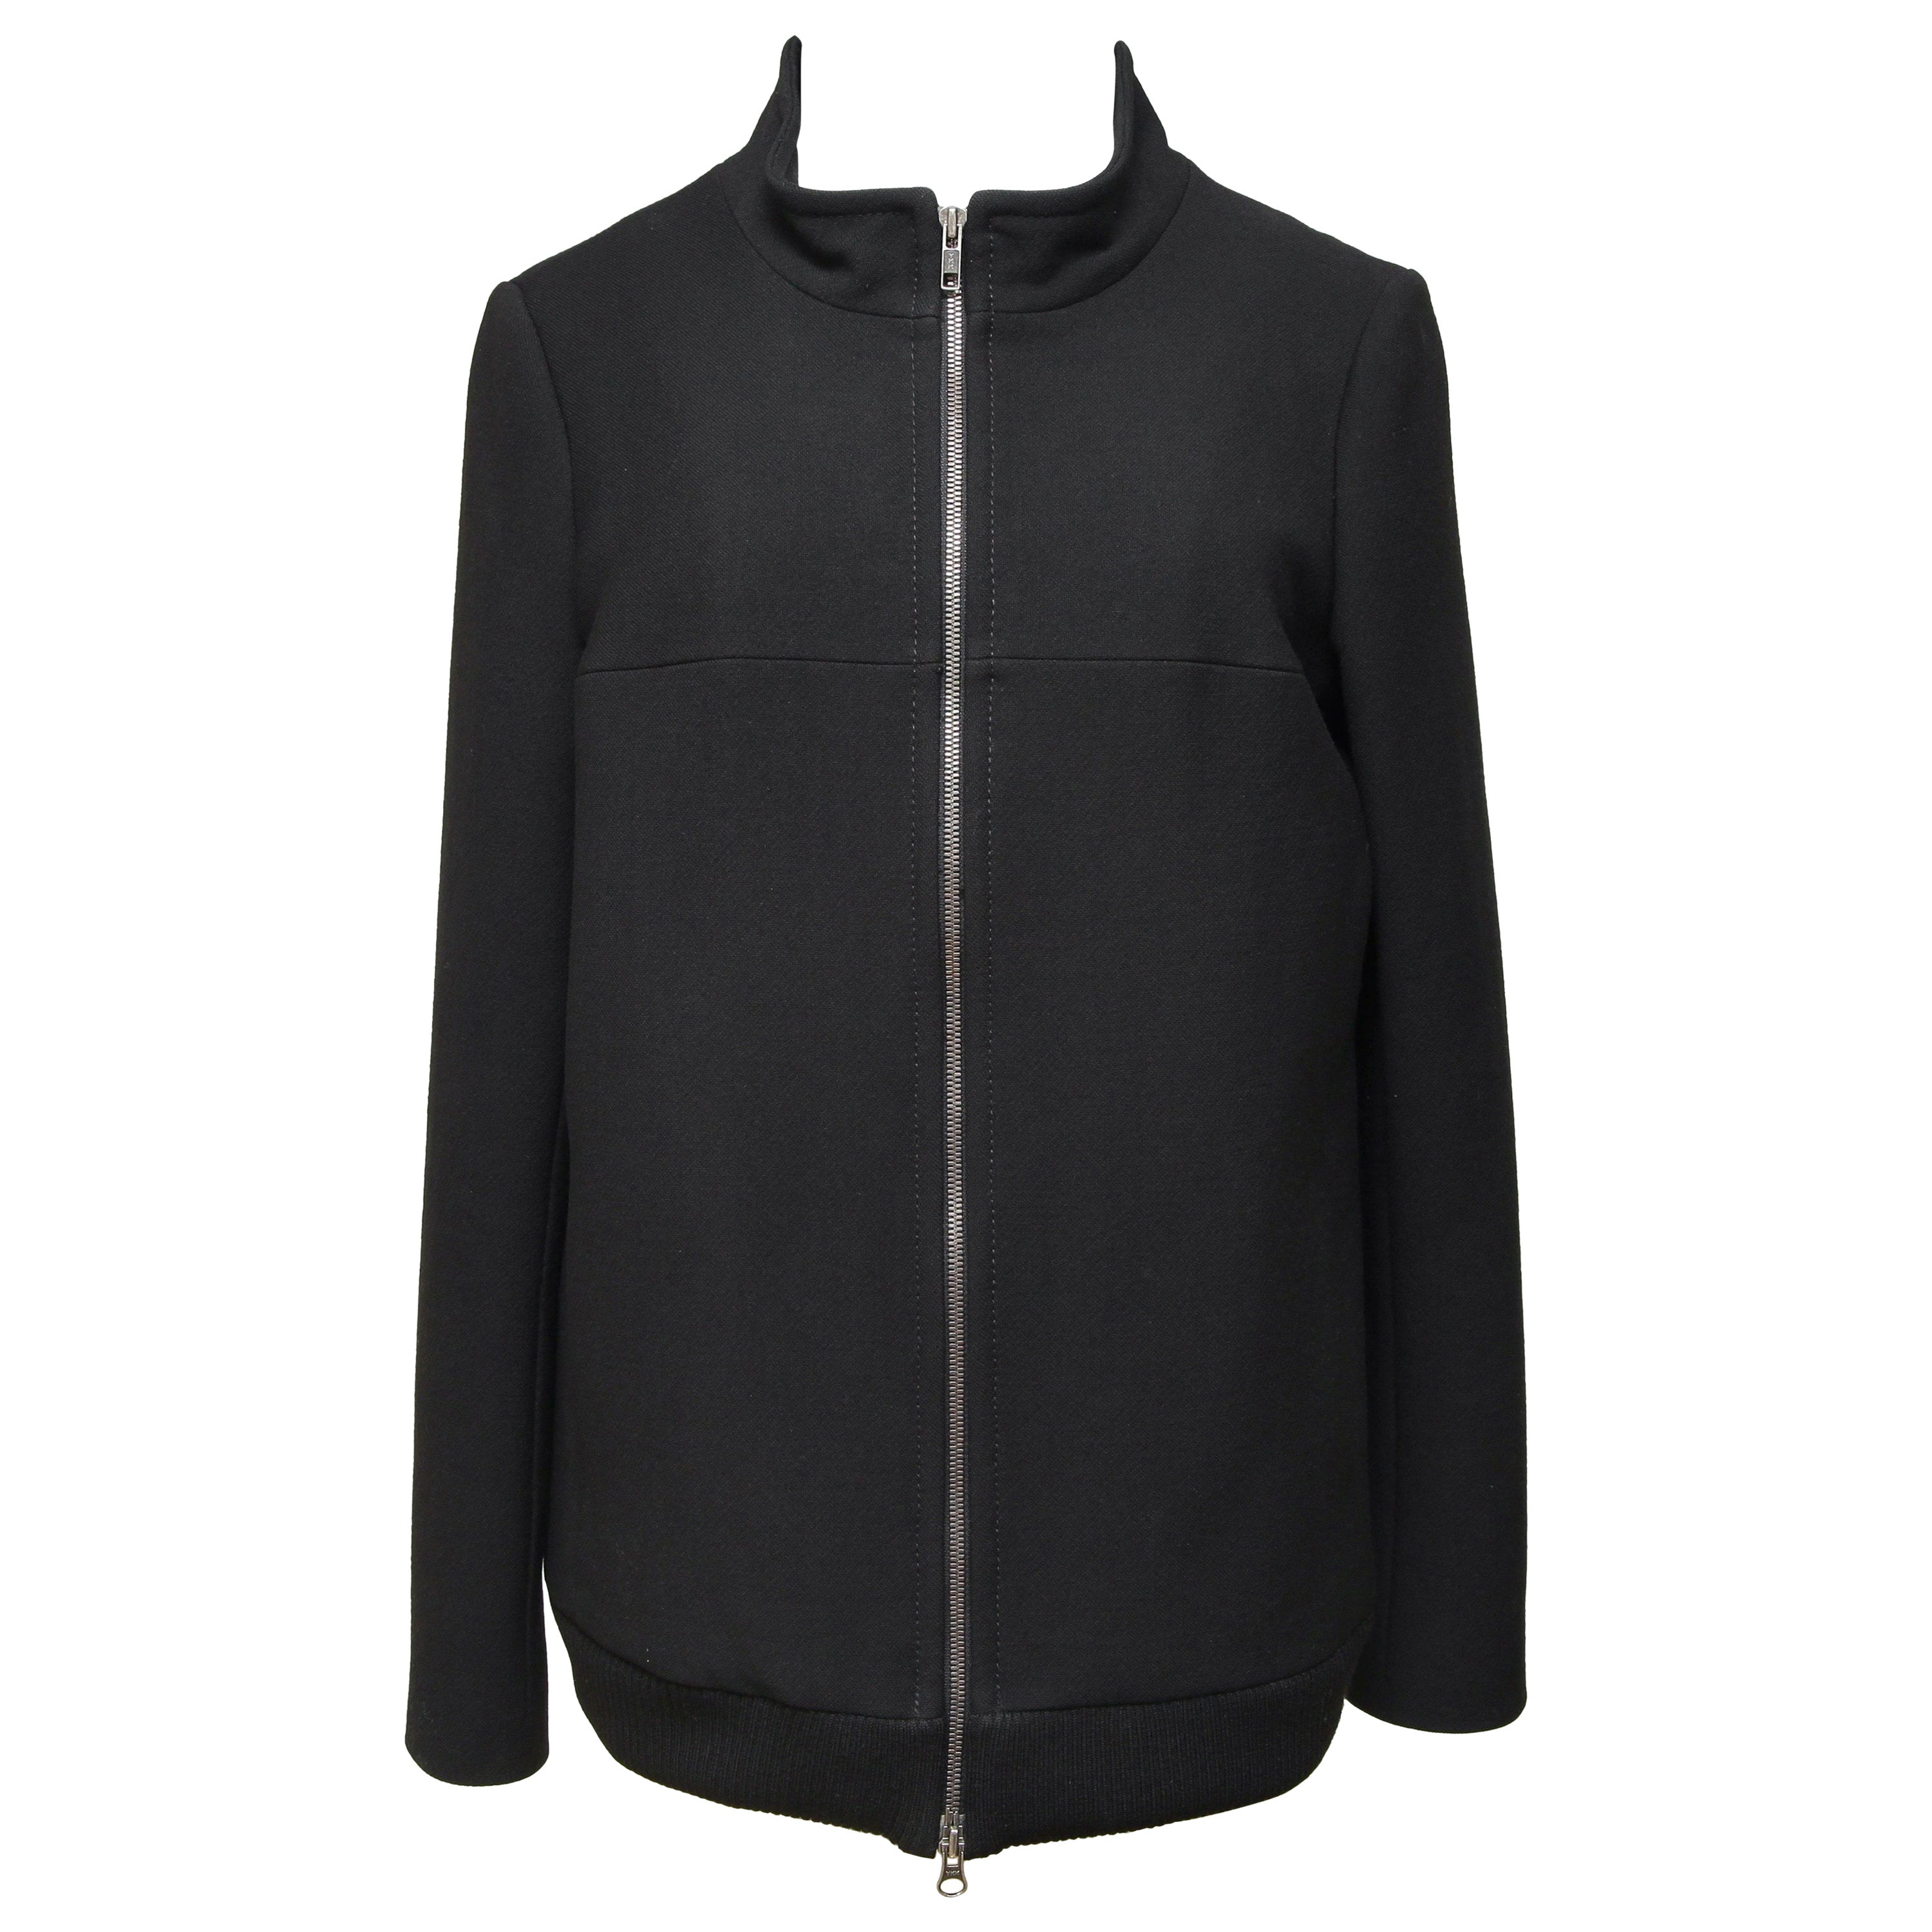 CHLOE Black Coat Jacket Long Sleeve Zipper Stand Up Collar Sz 36 2007